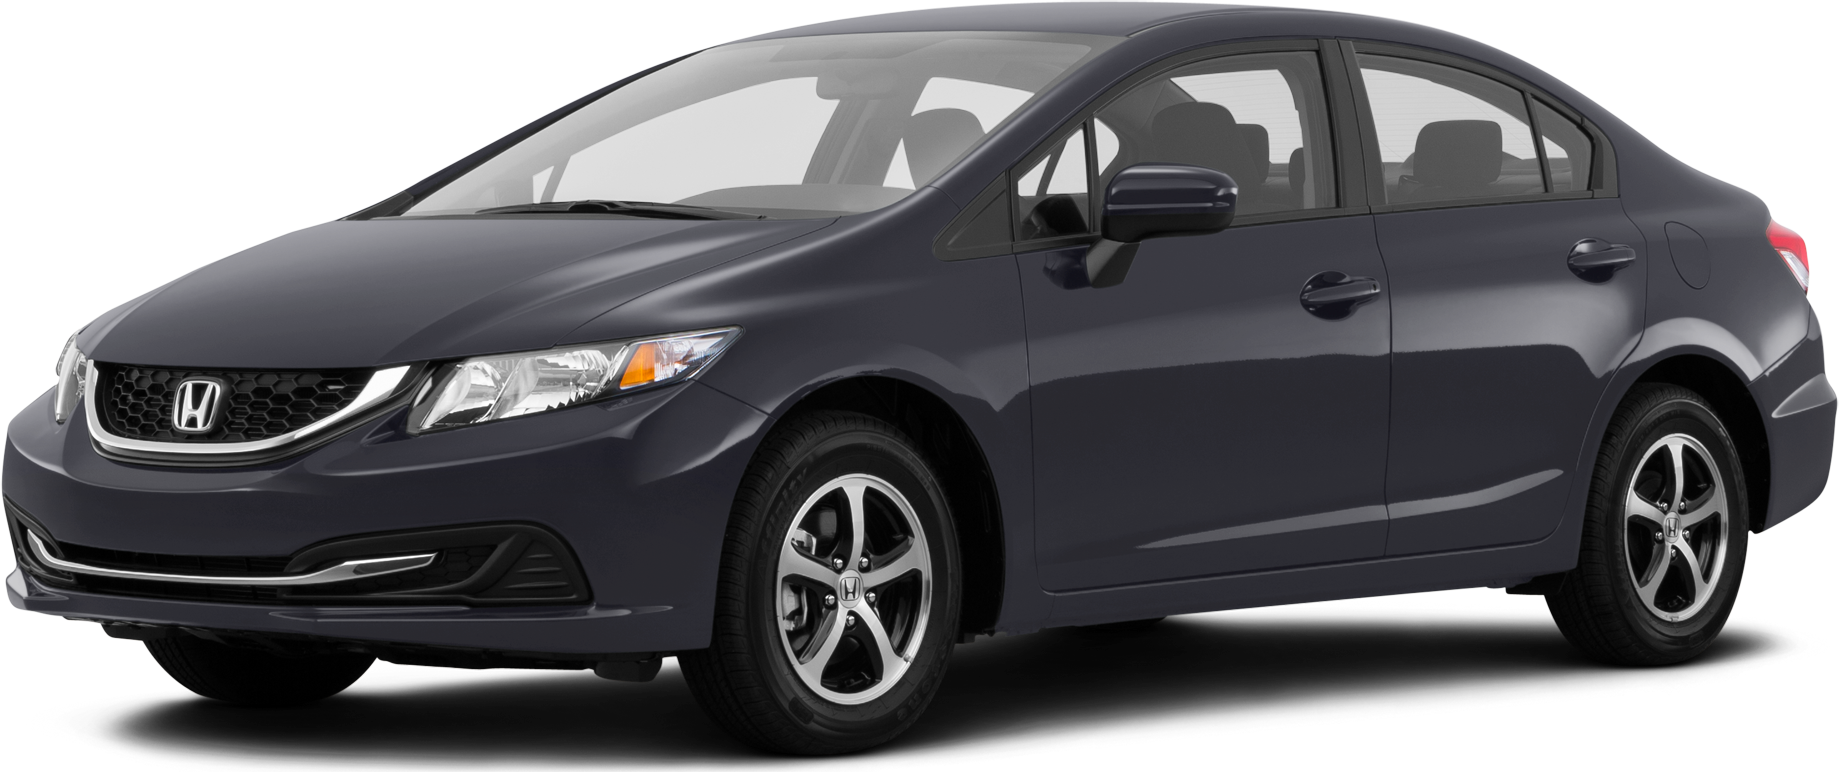 2015 Honda Civic Price, Value, Ratings & Reviews | Kelley Blue Book